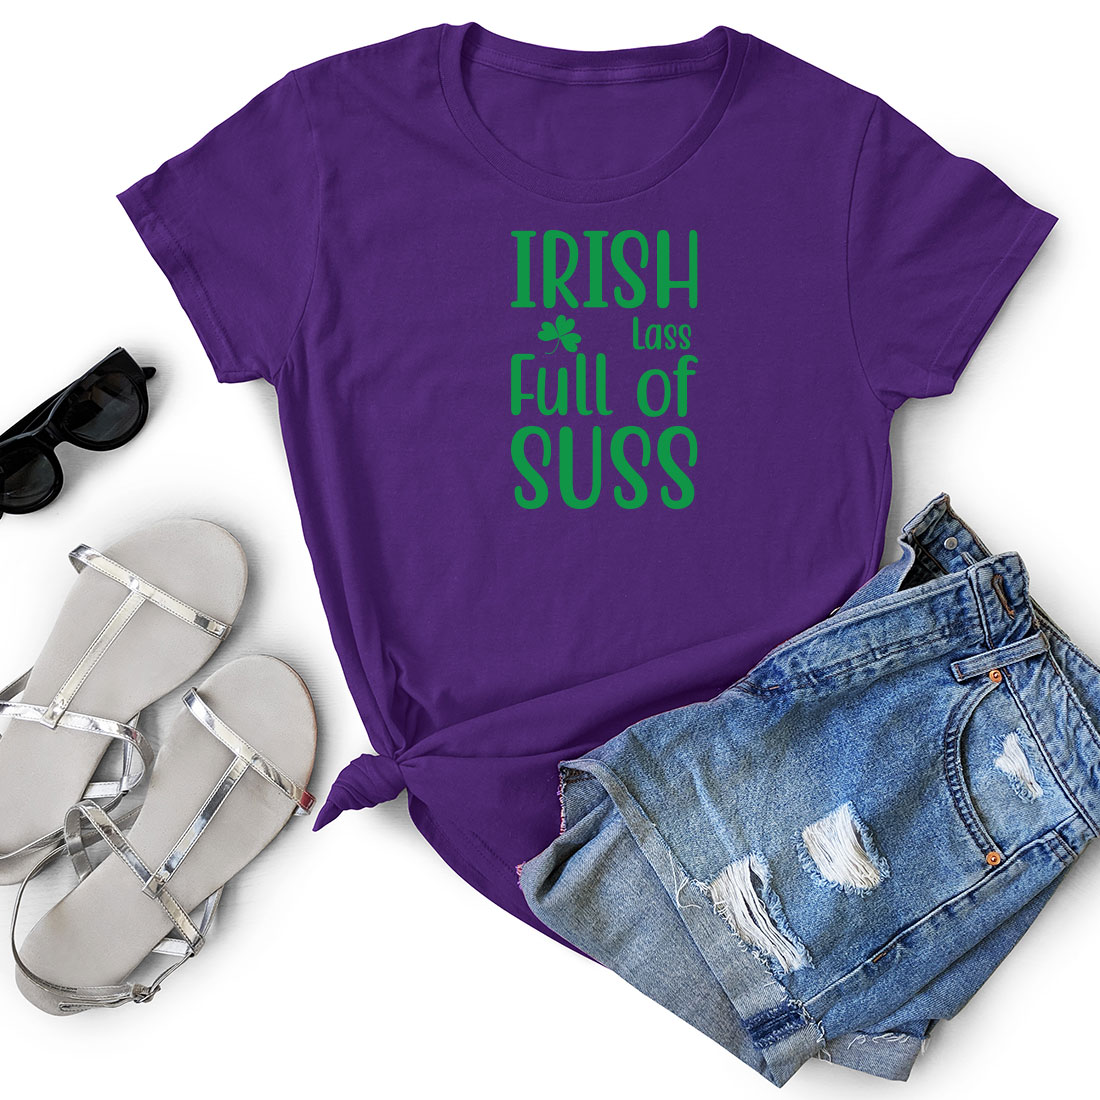 T - shirt that says irish is full of suss.